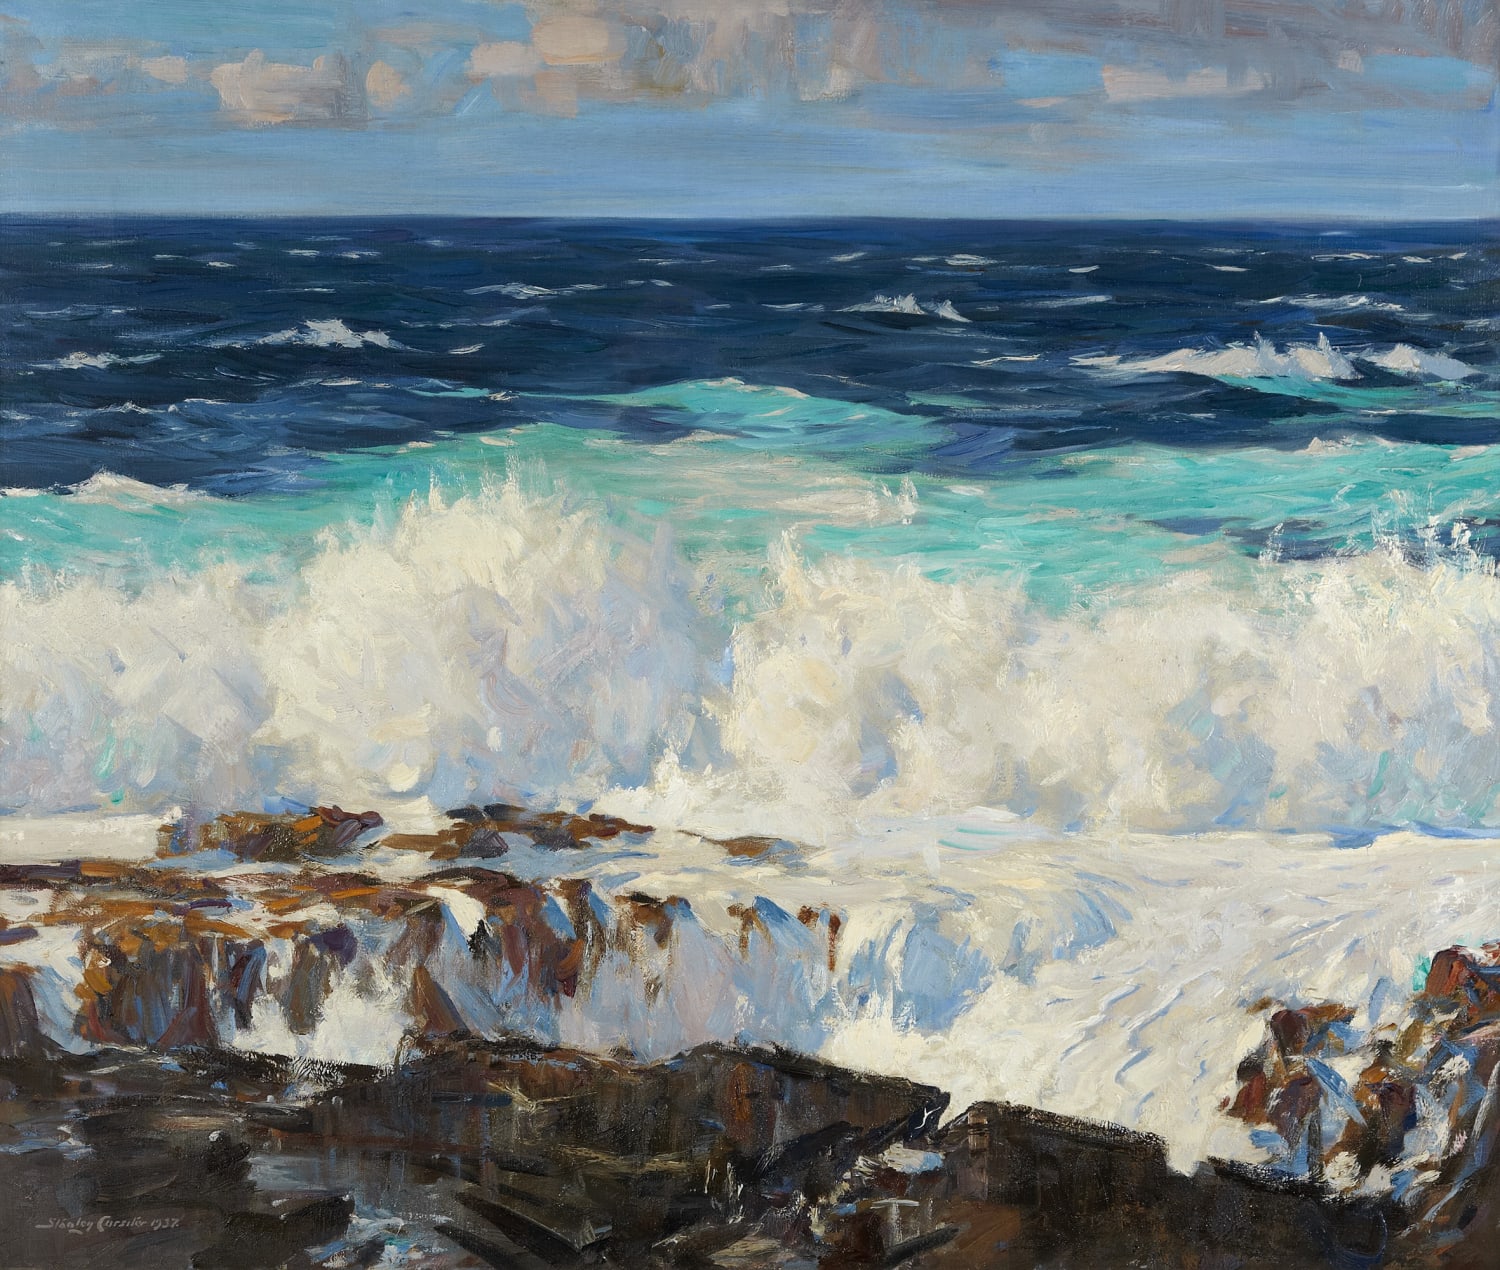 Stanley Cursiter CBE RSA (1887-1976), Surf  oil on canvas, 1937, 85.1 x 99.5cm  RSA Diploma Collection Deposit, 1938. 1999.004